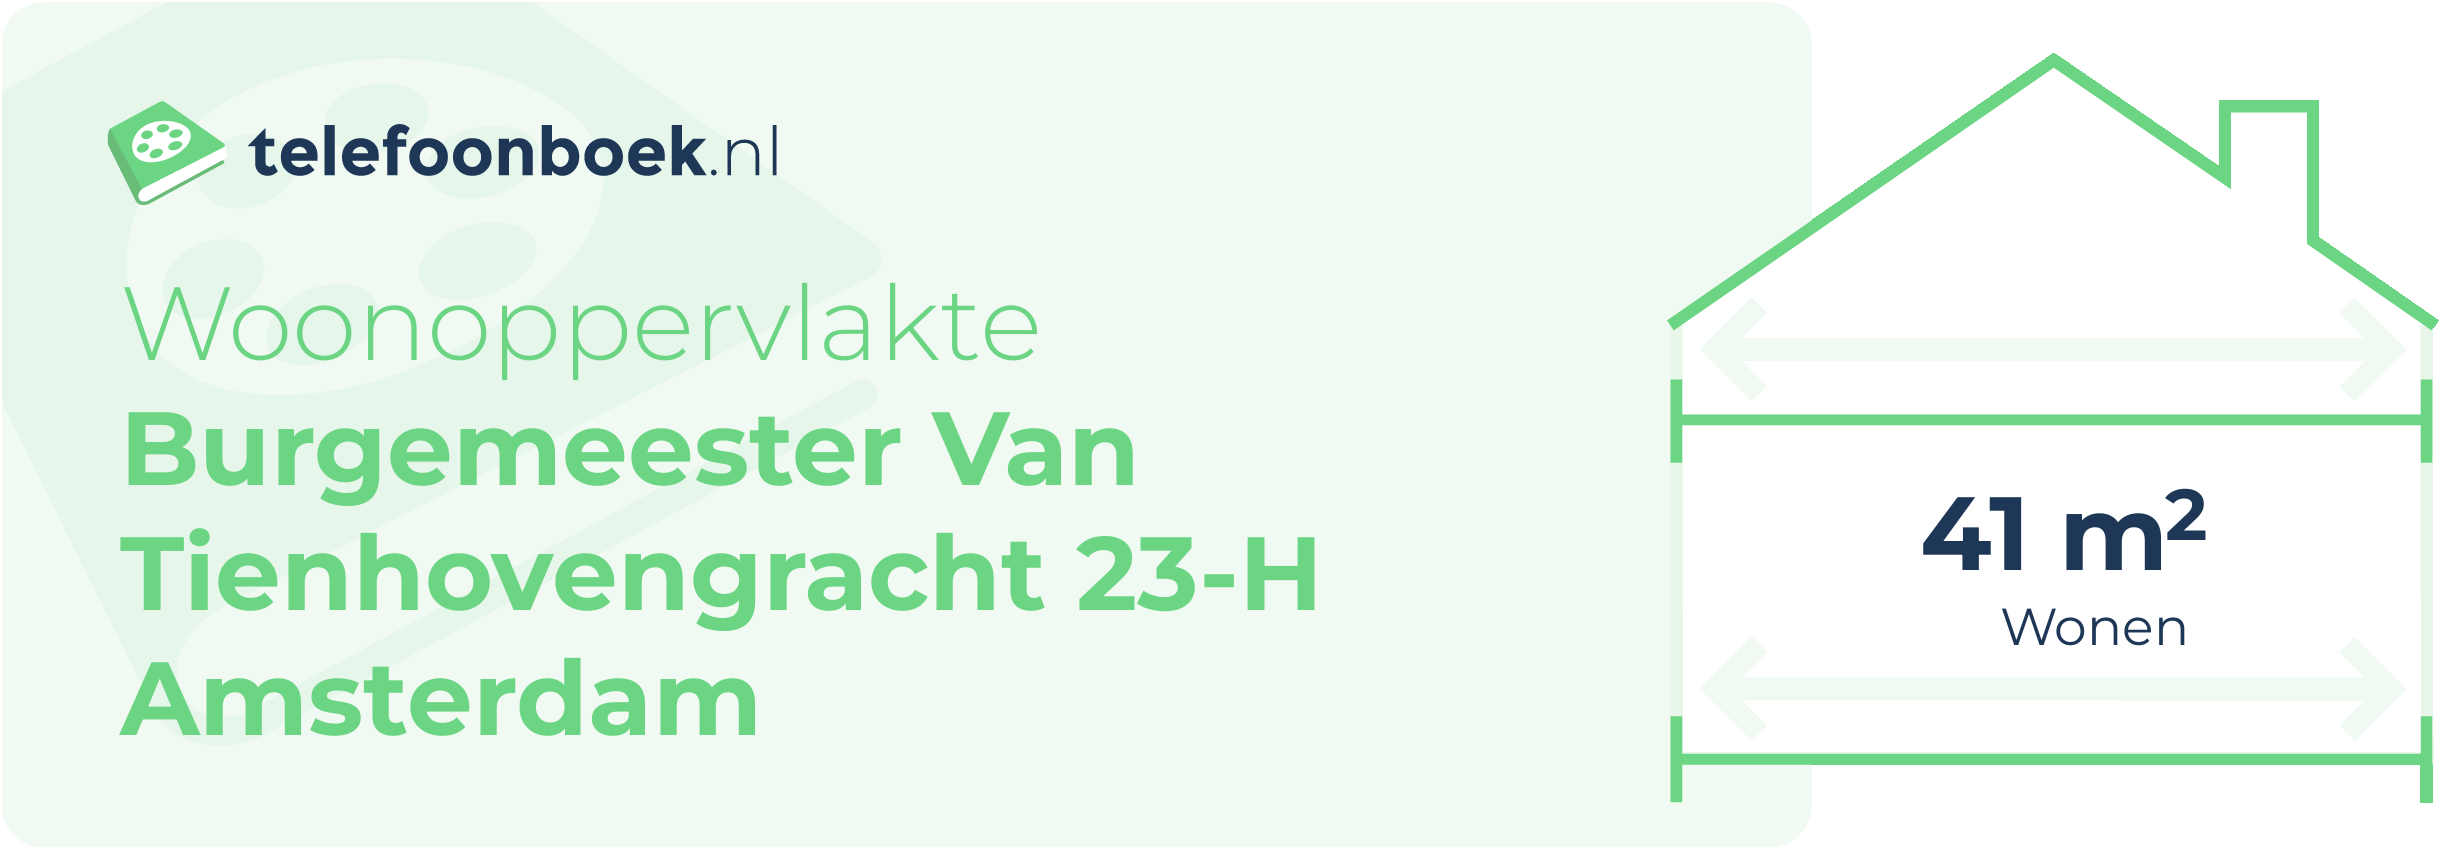 Woonoppervlakte Burgemeester Van Tienhovengracht 23-H Amsterdam